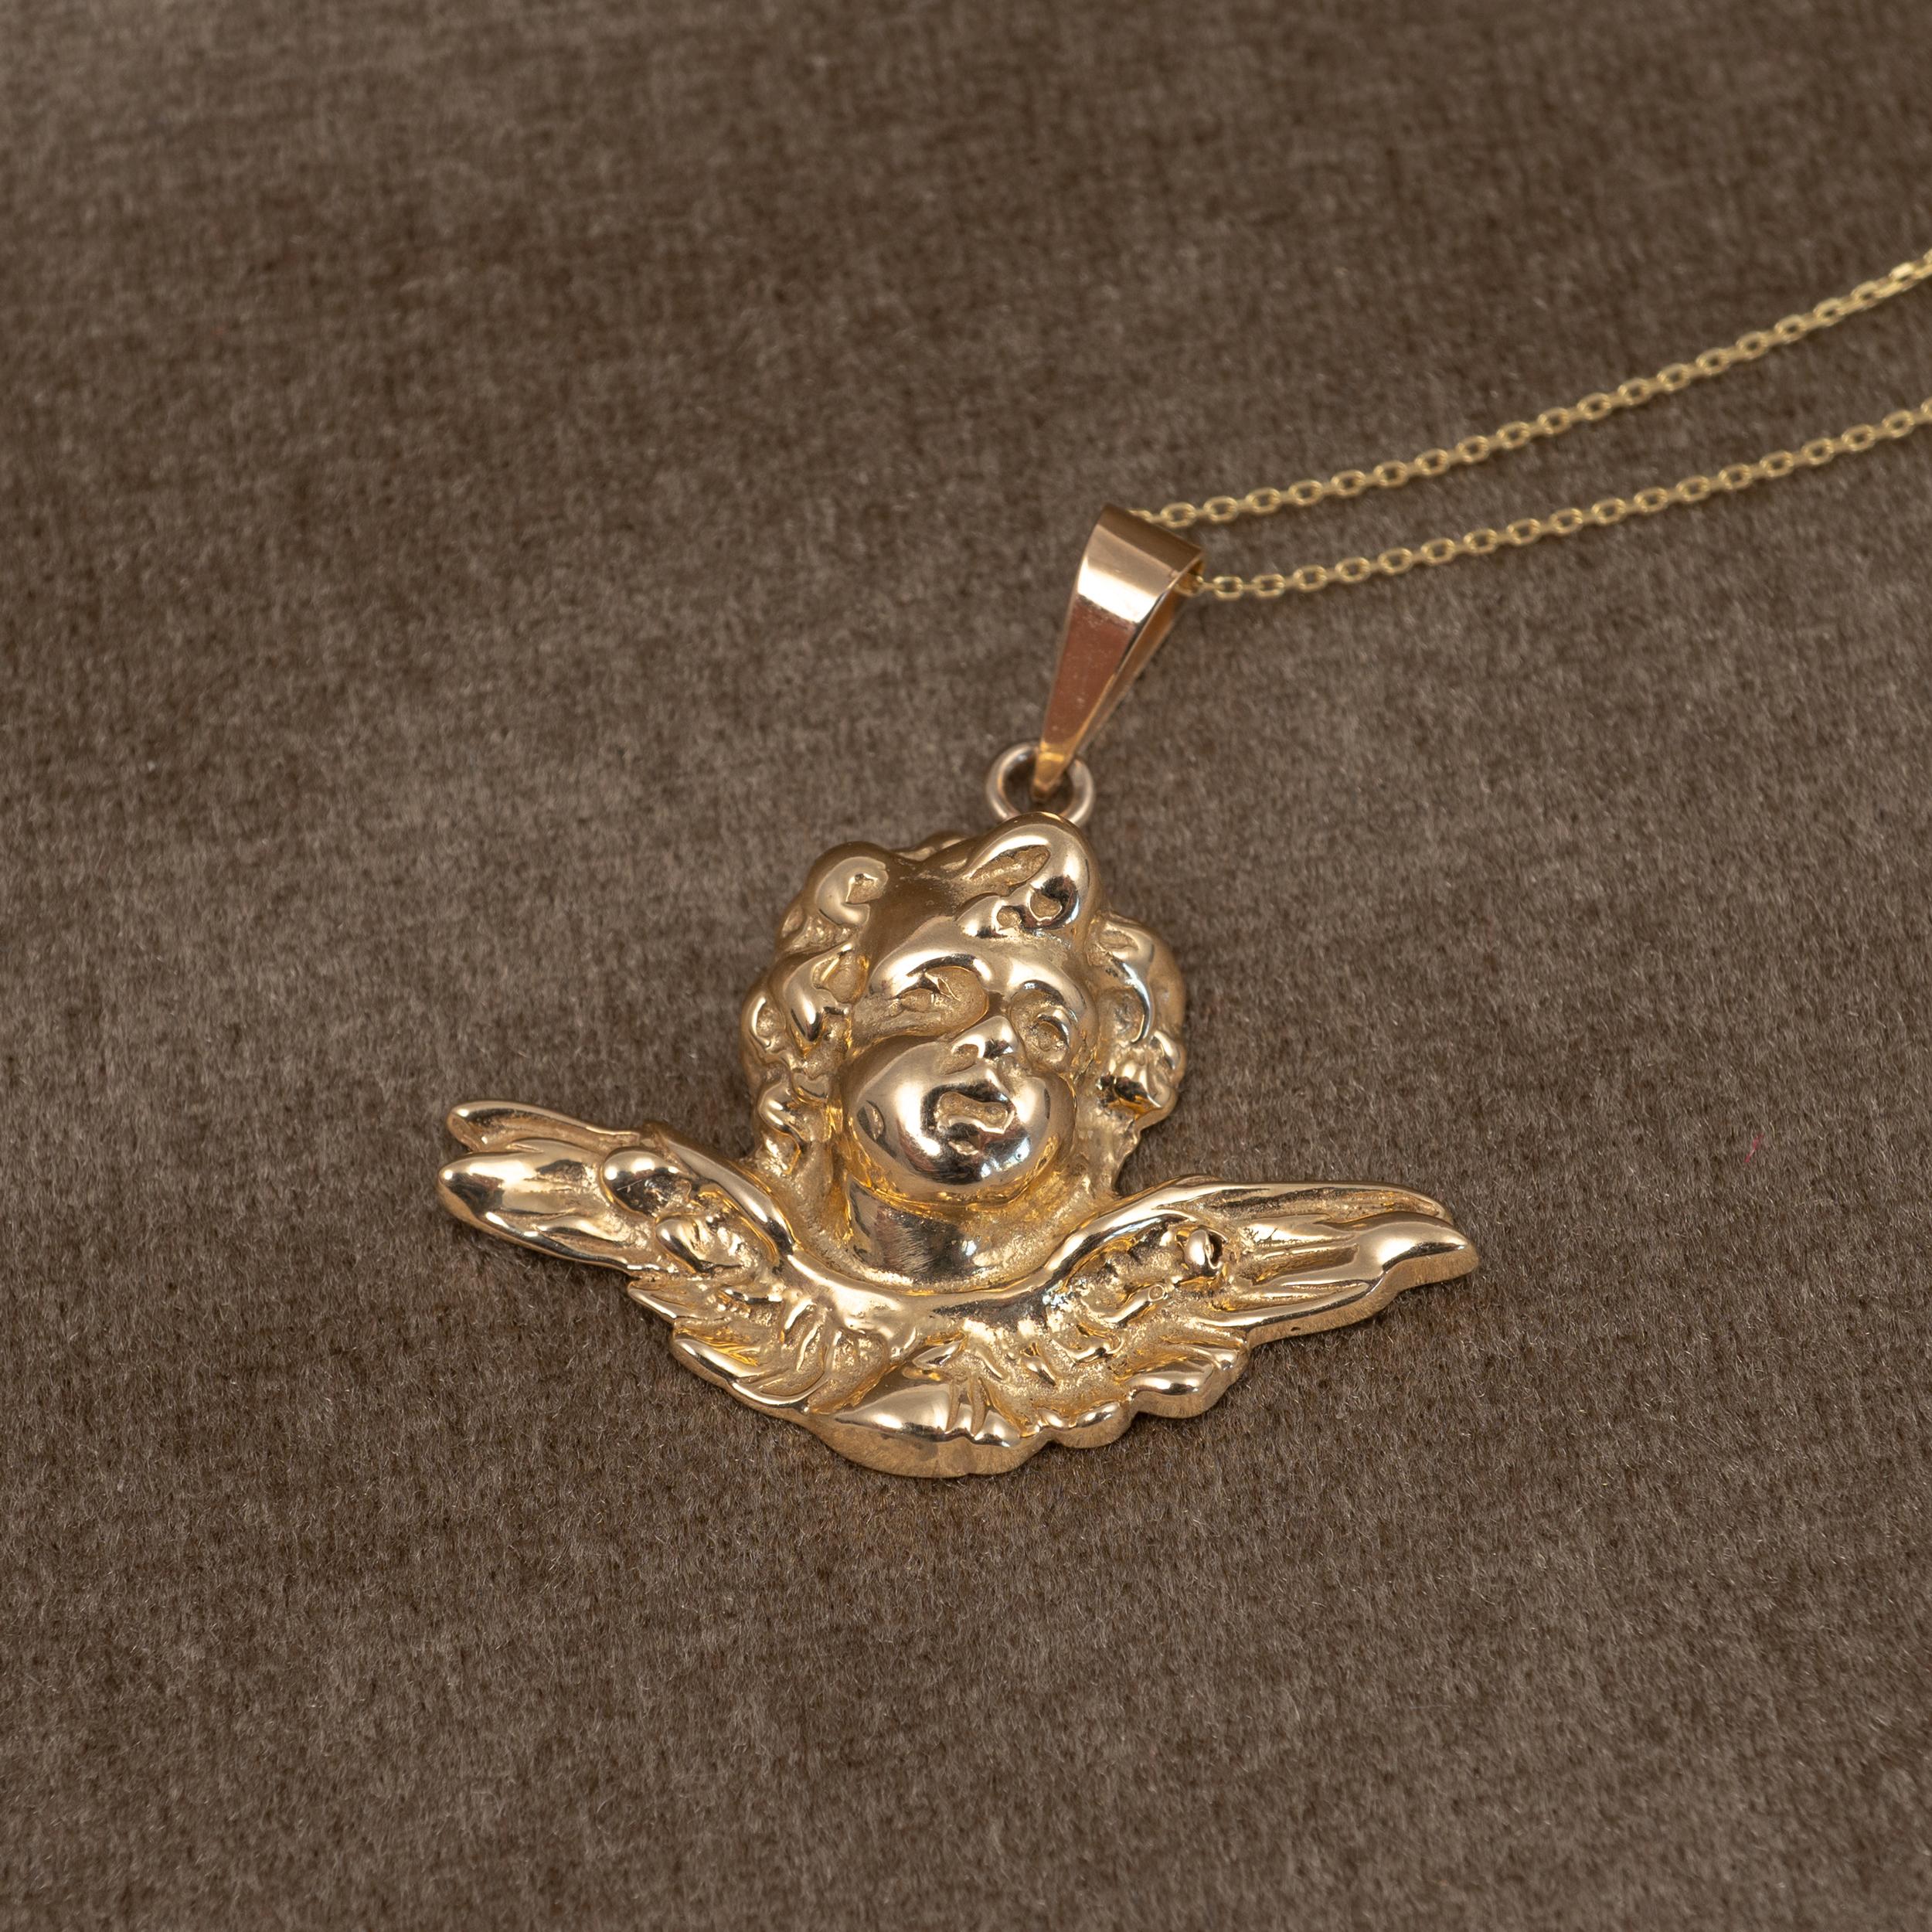 Art Nouveau Solid Gold Winged Cherub Pendant Necklace, Mythological & Religious Jewelry